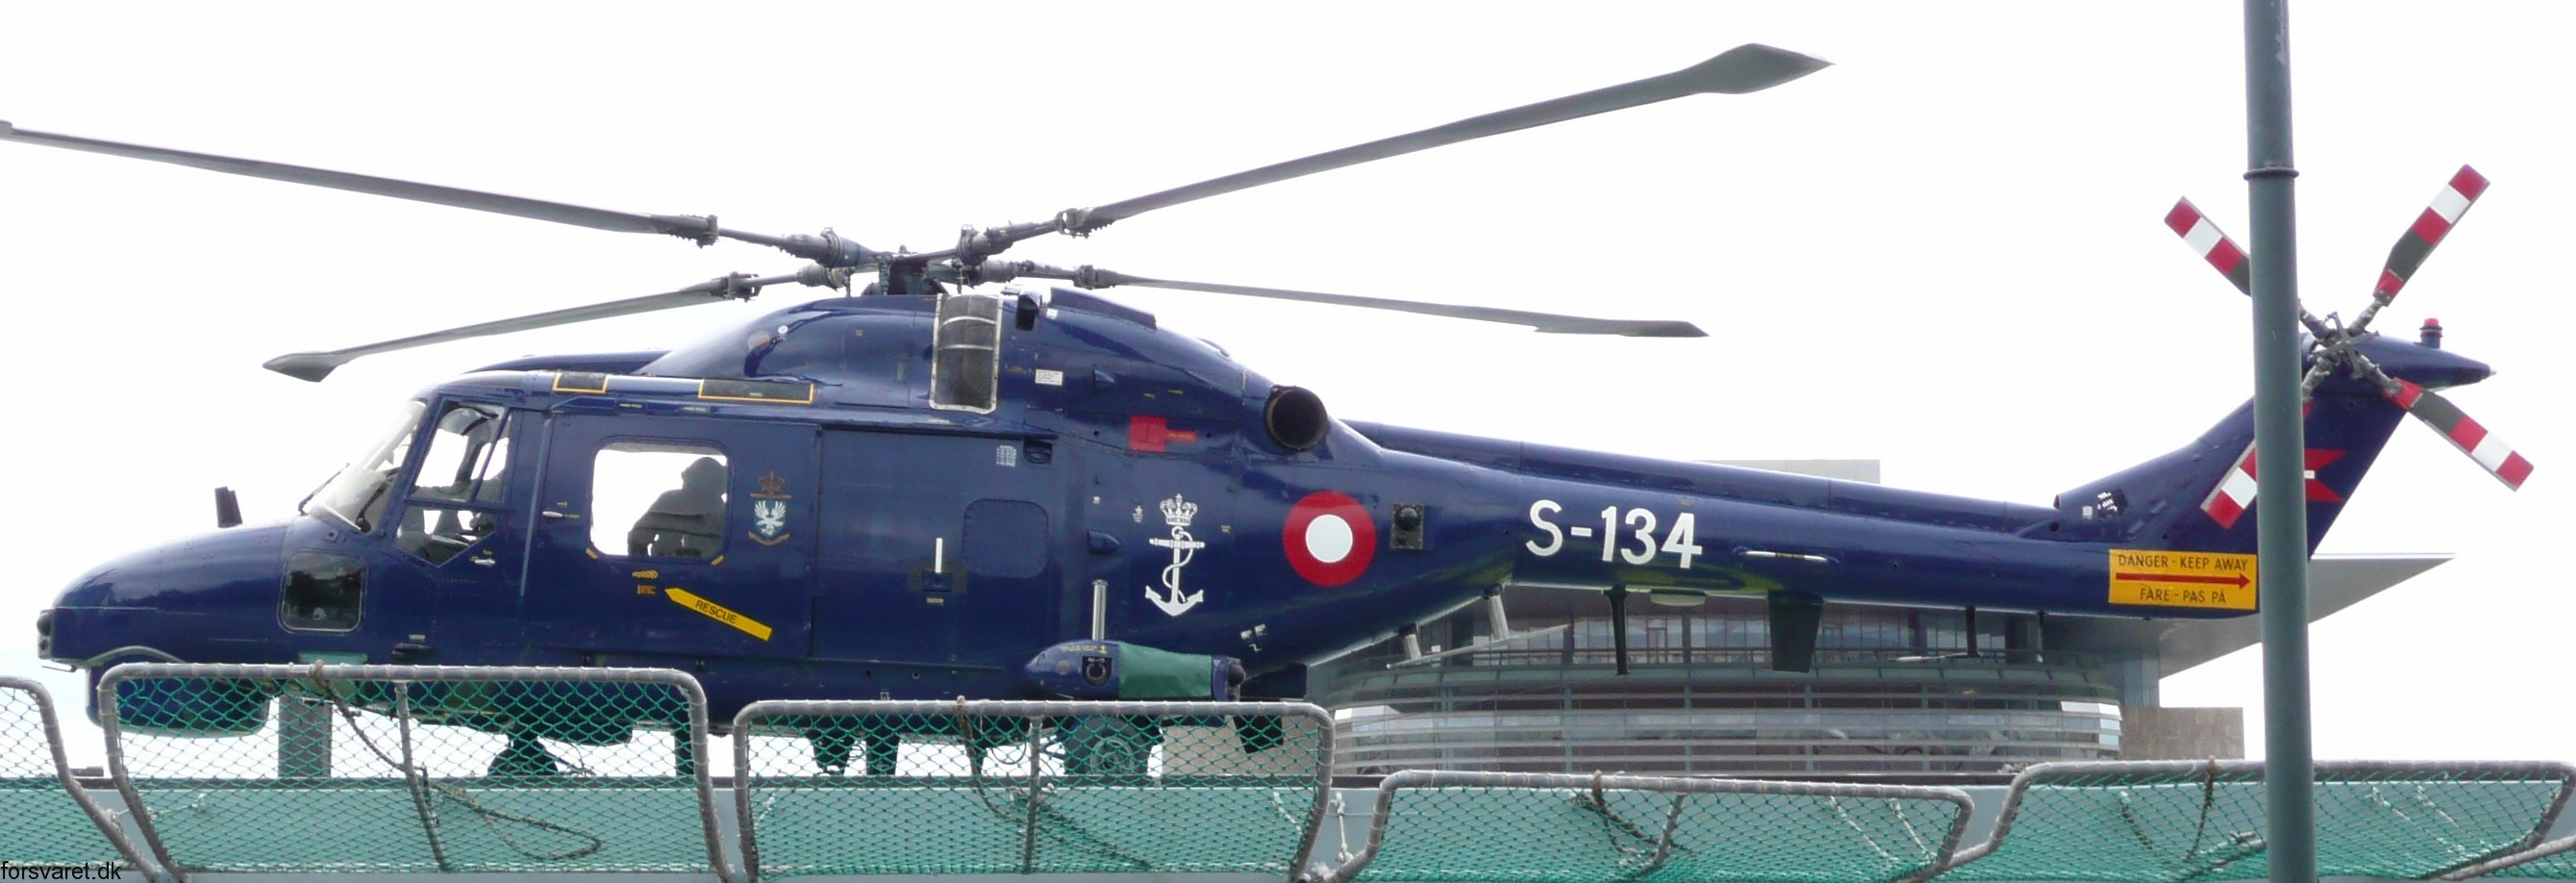 lynx mk.80 mk.90b helicopter westland royal danish navy air force kongelige danske marine flyvevabnet s-134 19